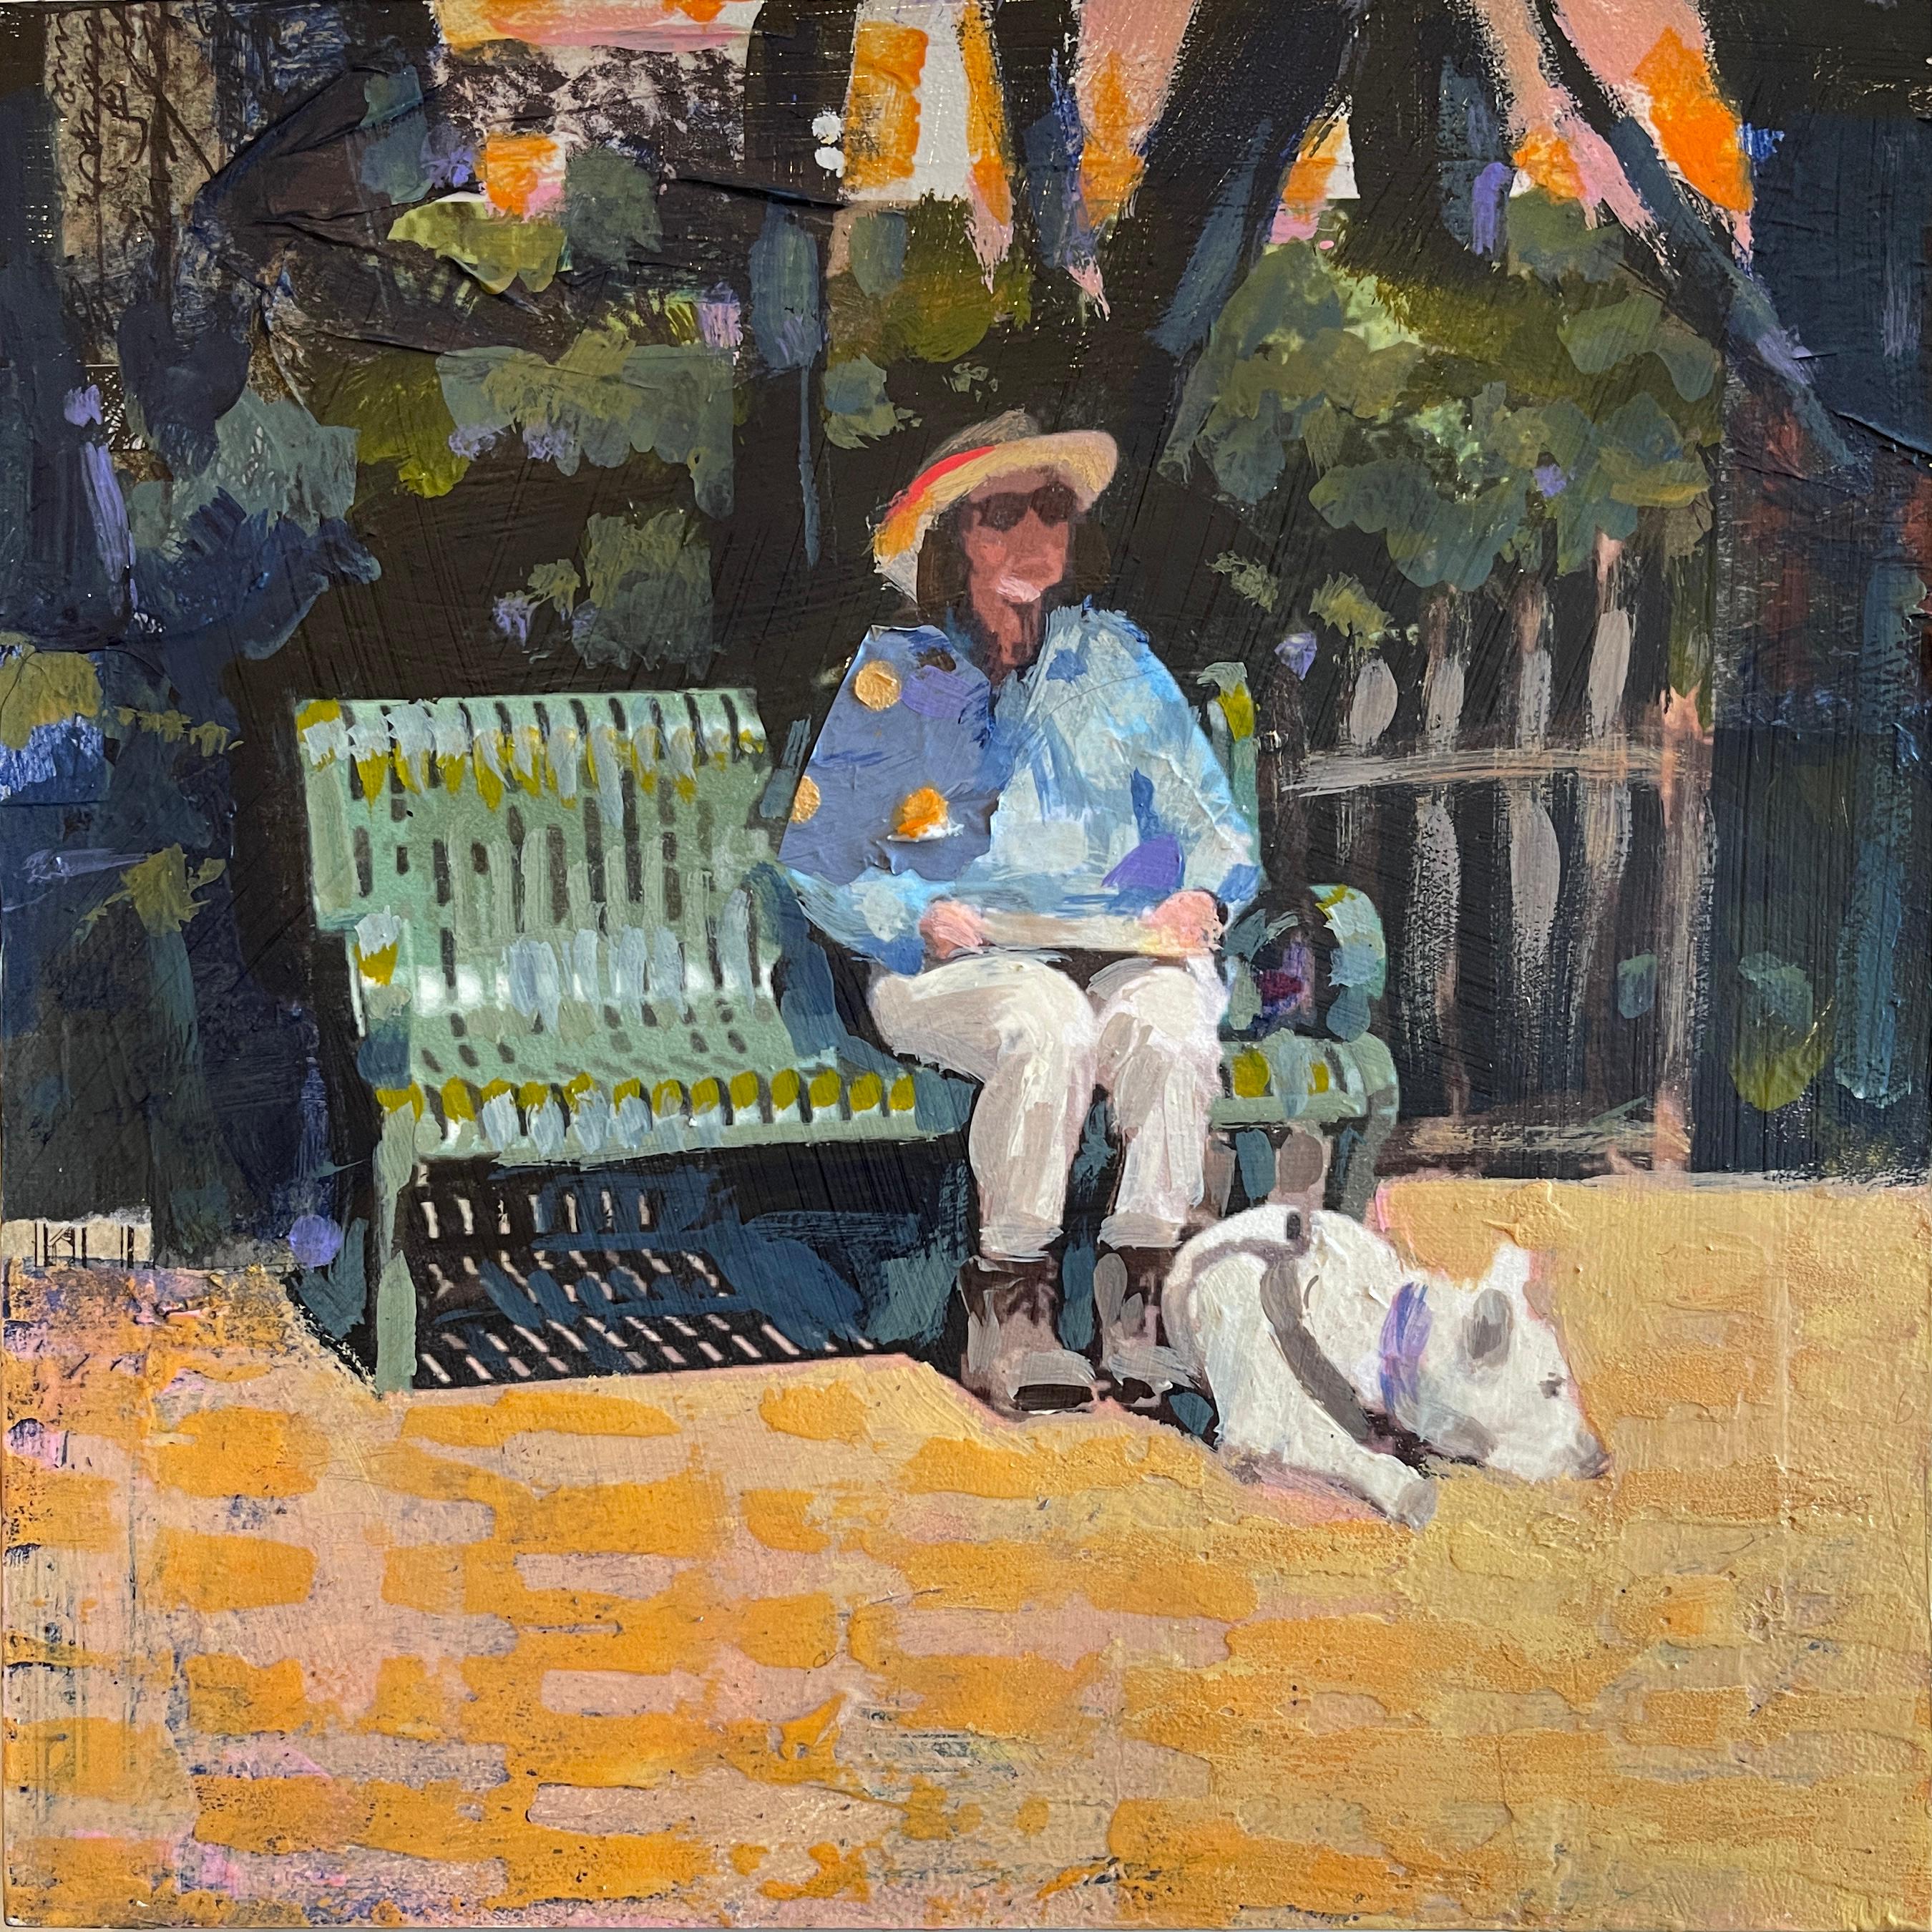 Rest Break in the Gardens, Original Painting